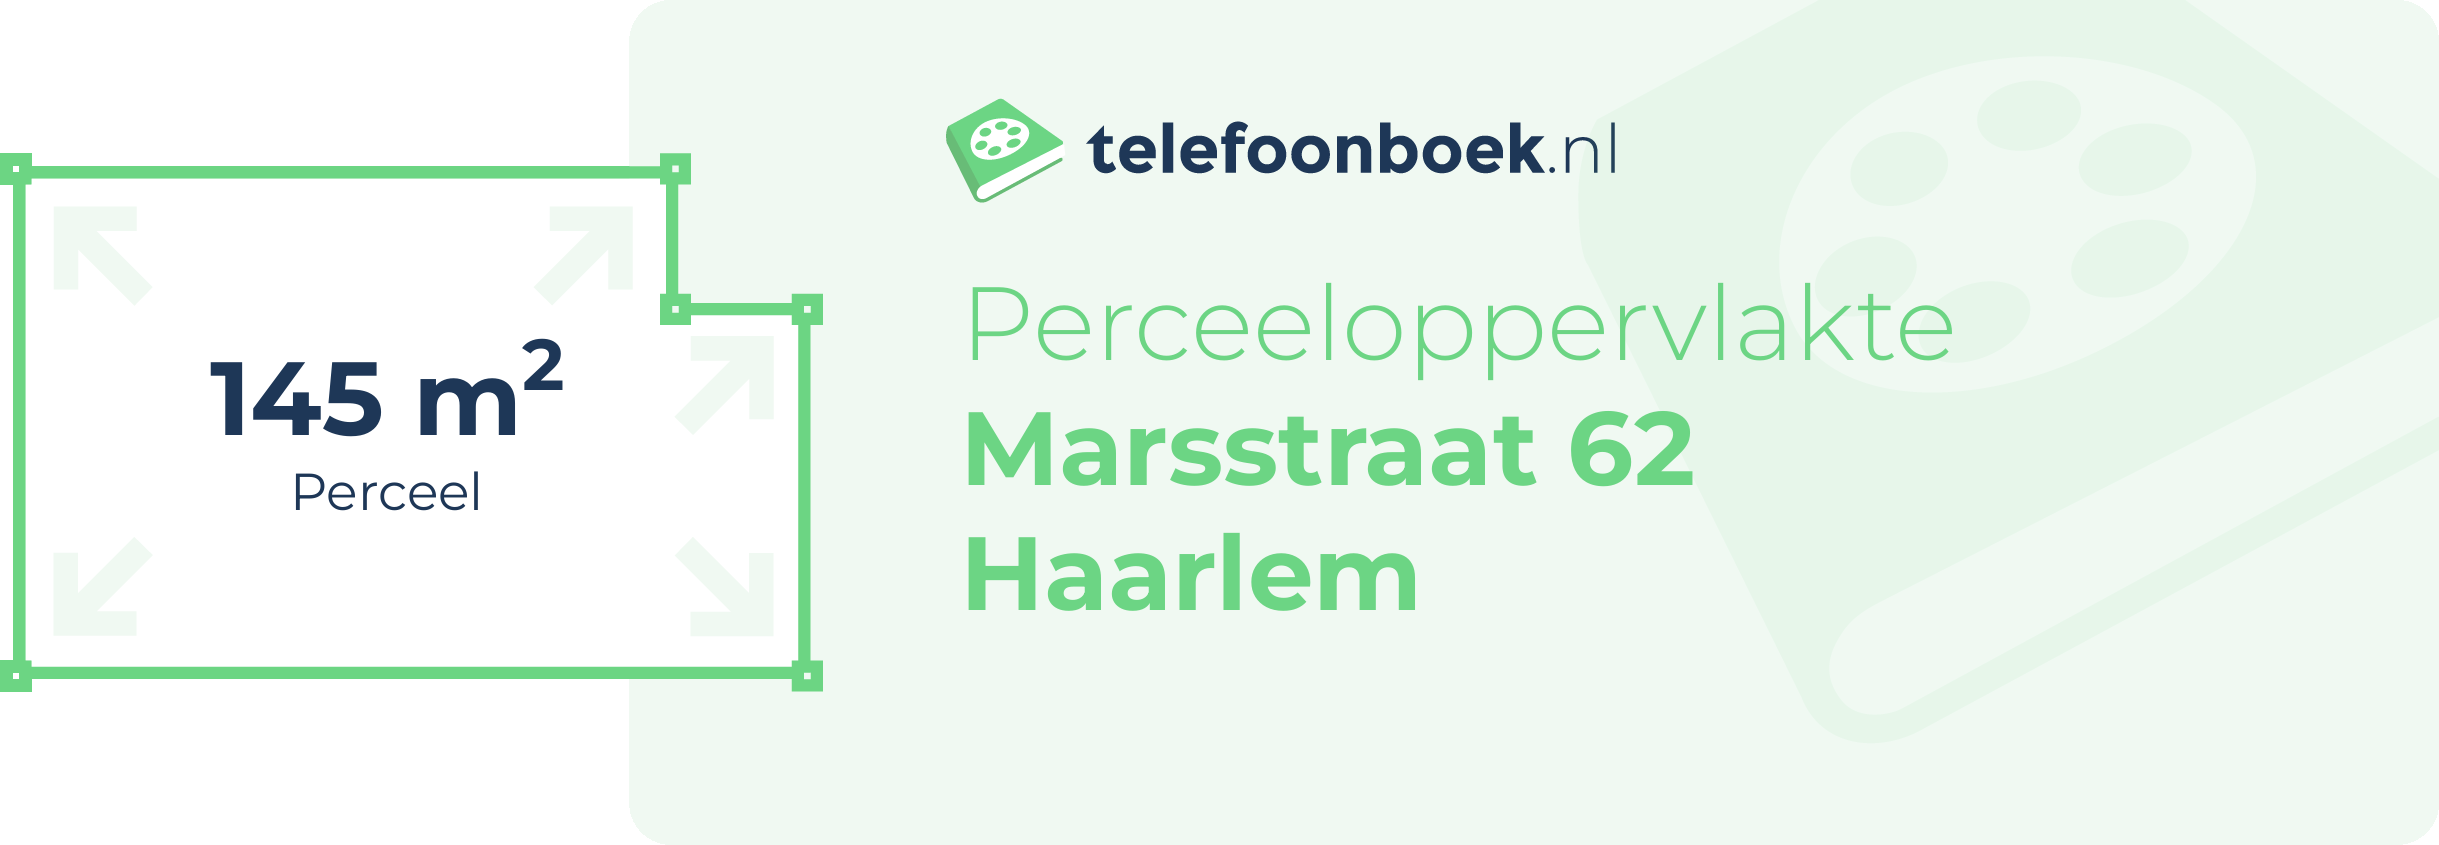 Perceeloppervlakte Marsstraat 62 Haarlem